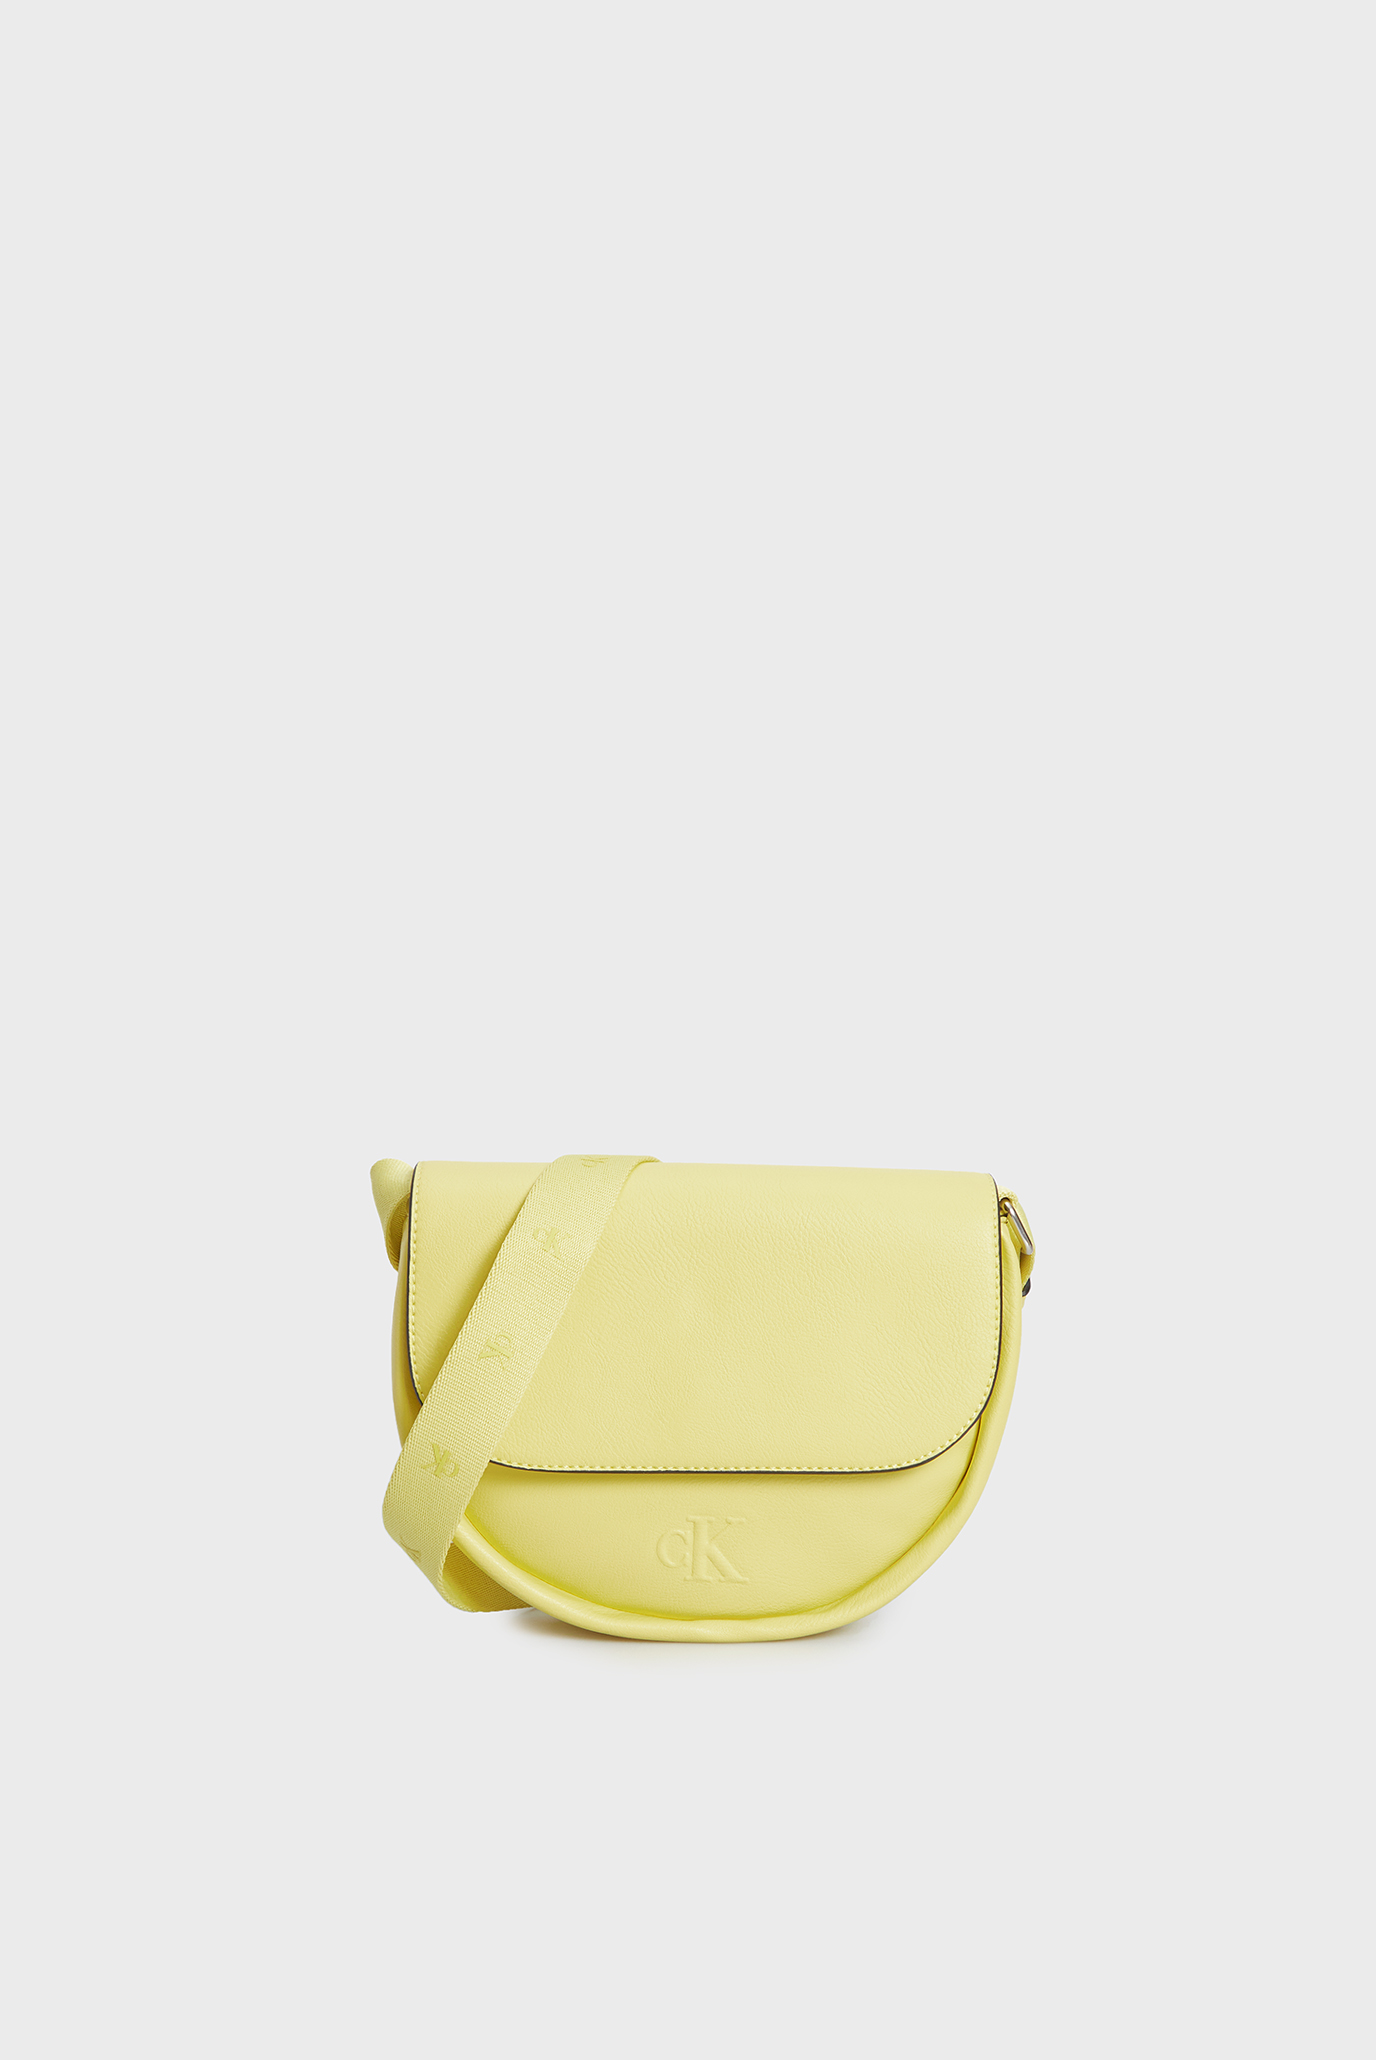 Жіноча жовта сумка ULTRALIGHT SADDLE22 PU 1